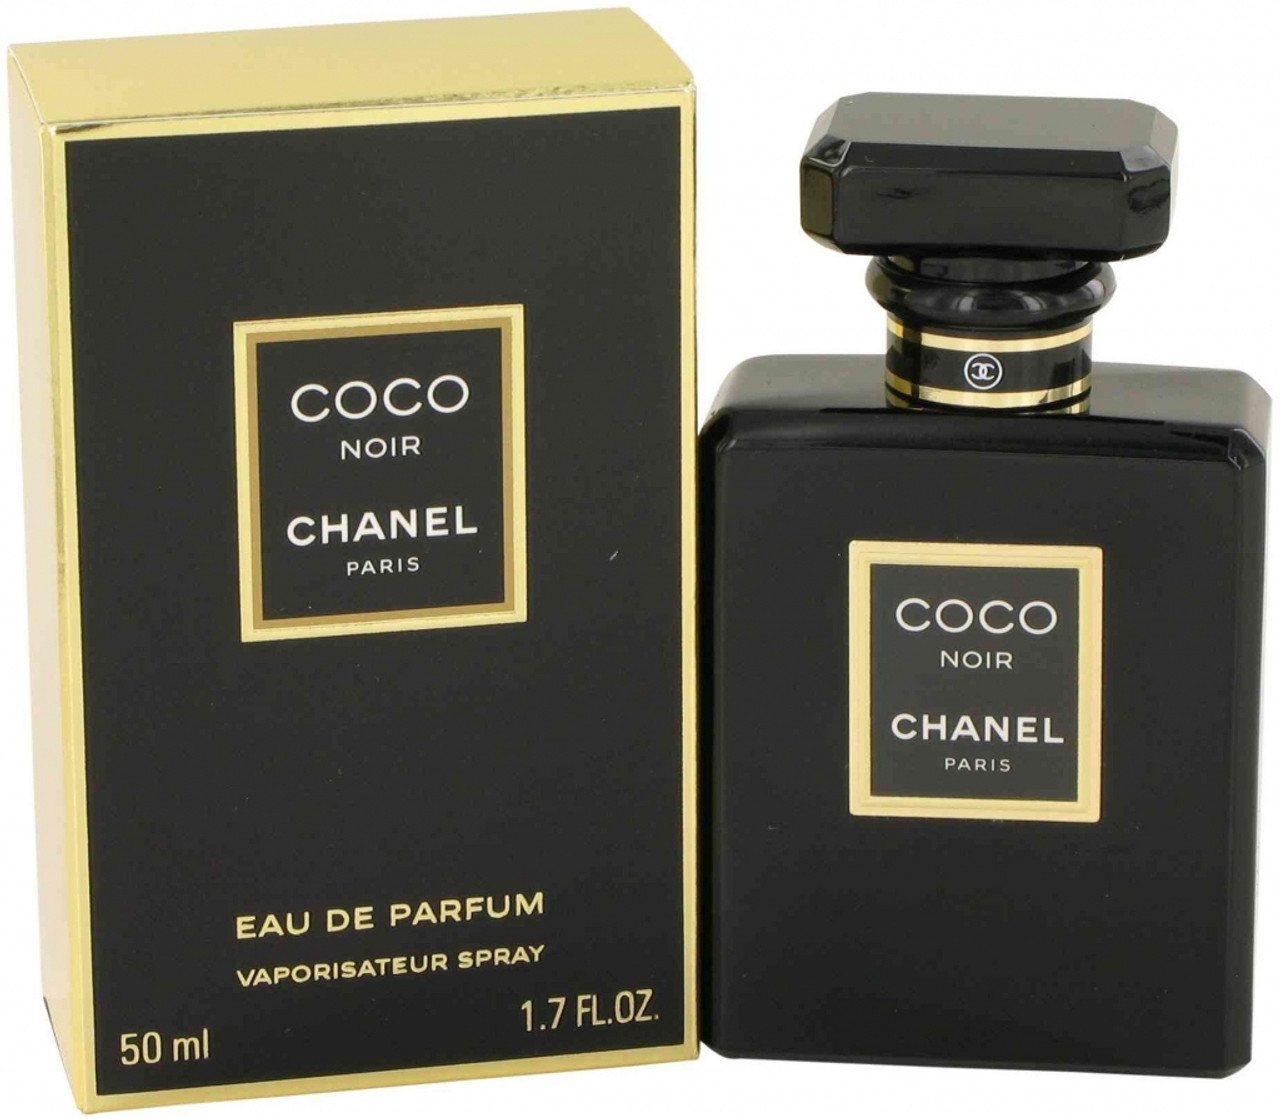 Chanel Coco Chanel Eau de Toilette Spray For Women, 1.7 Oz 